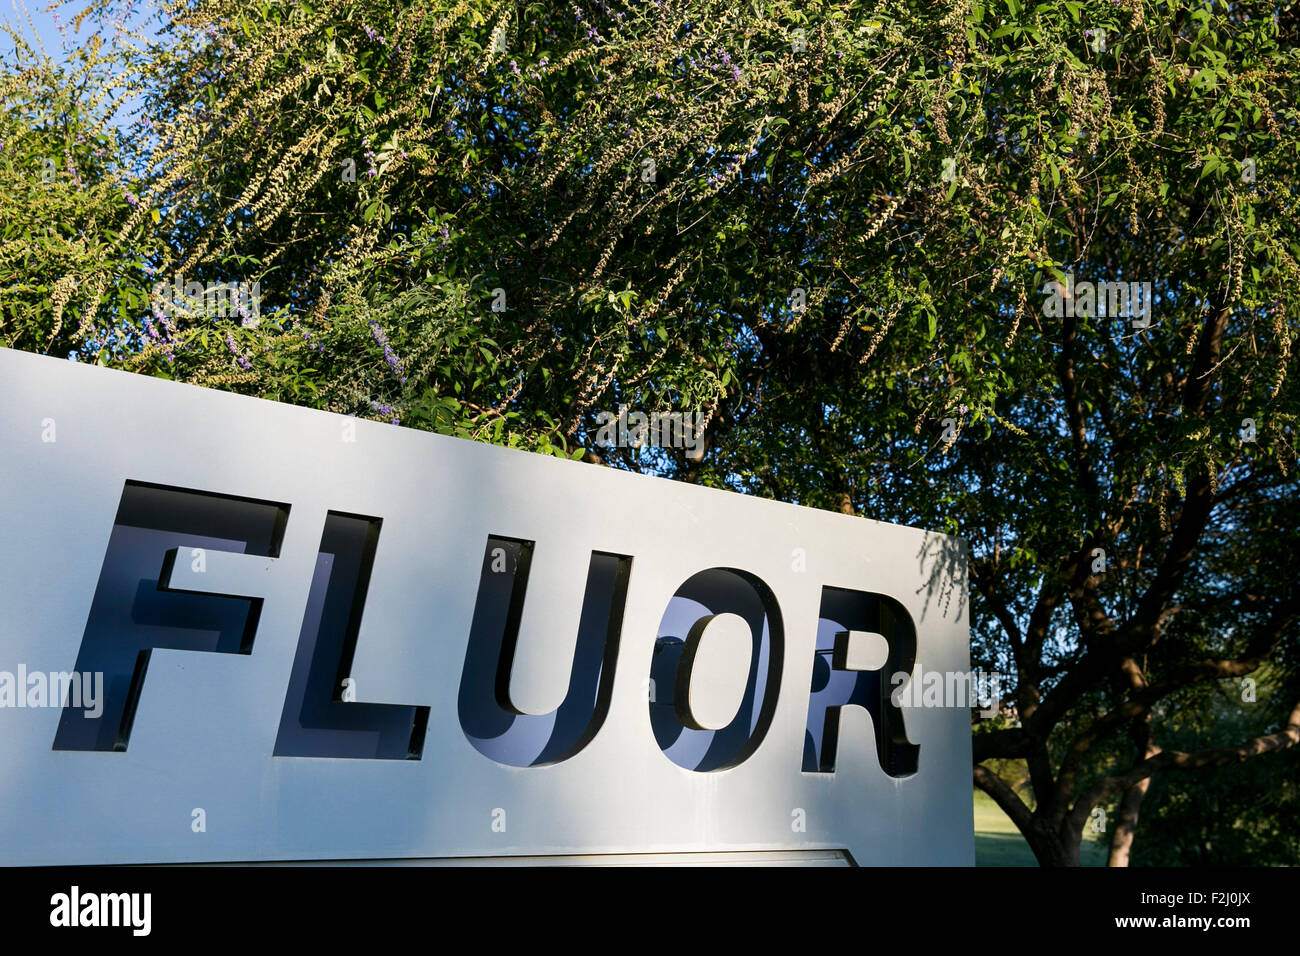 fluor logo